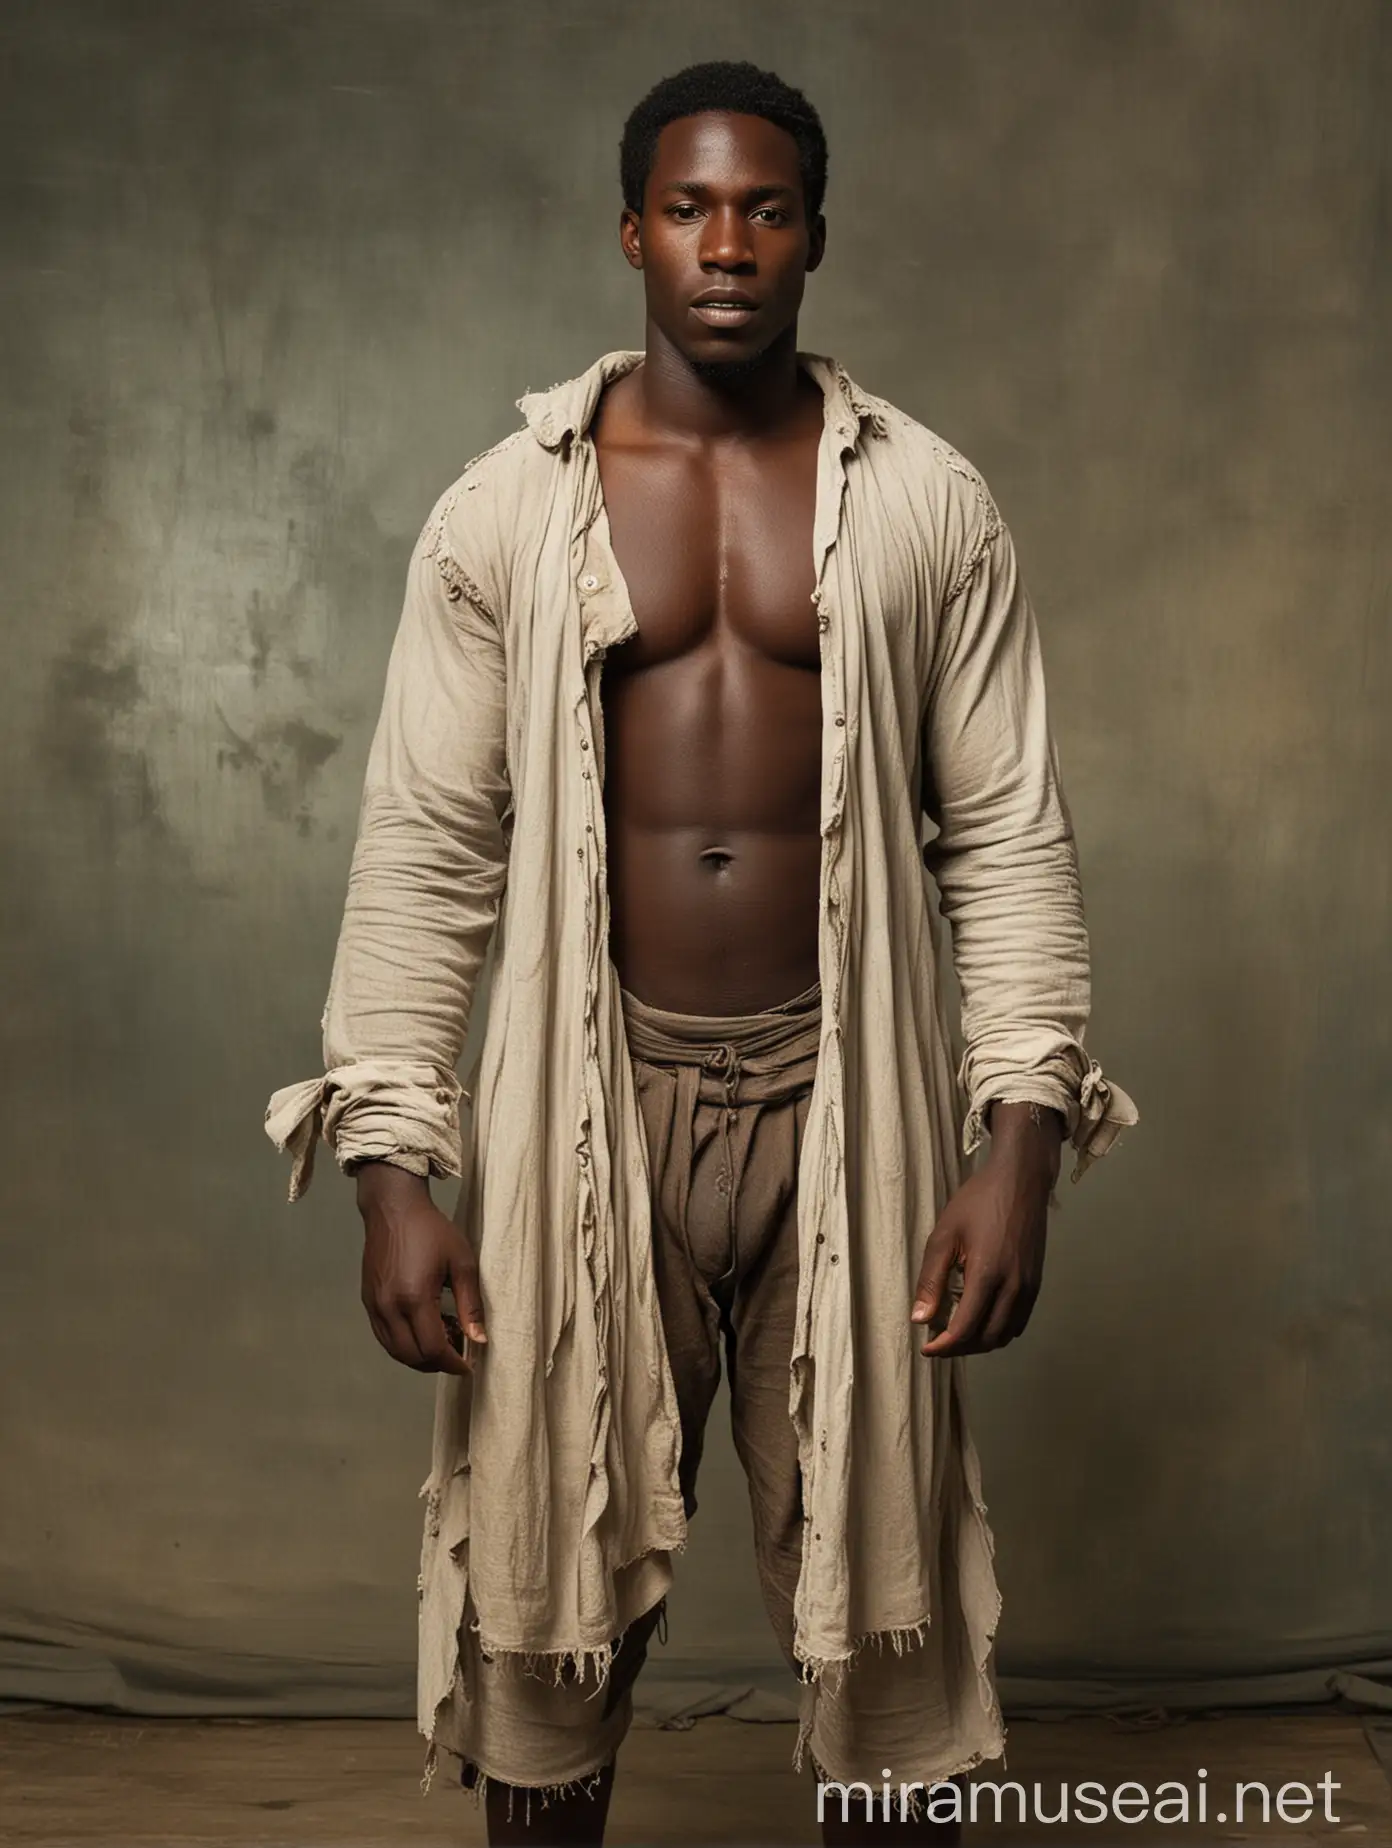 Un esclavo negro de cuerpo completo con la ropa deshilachada